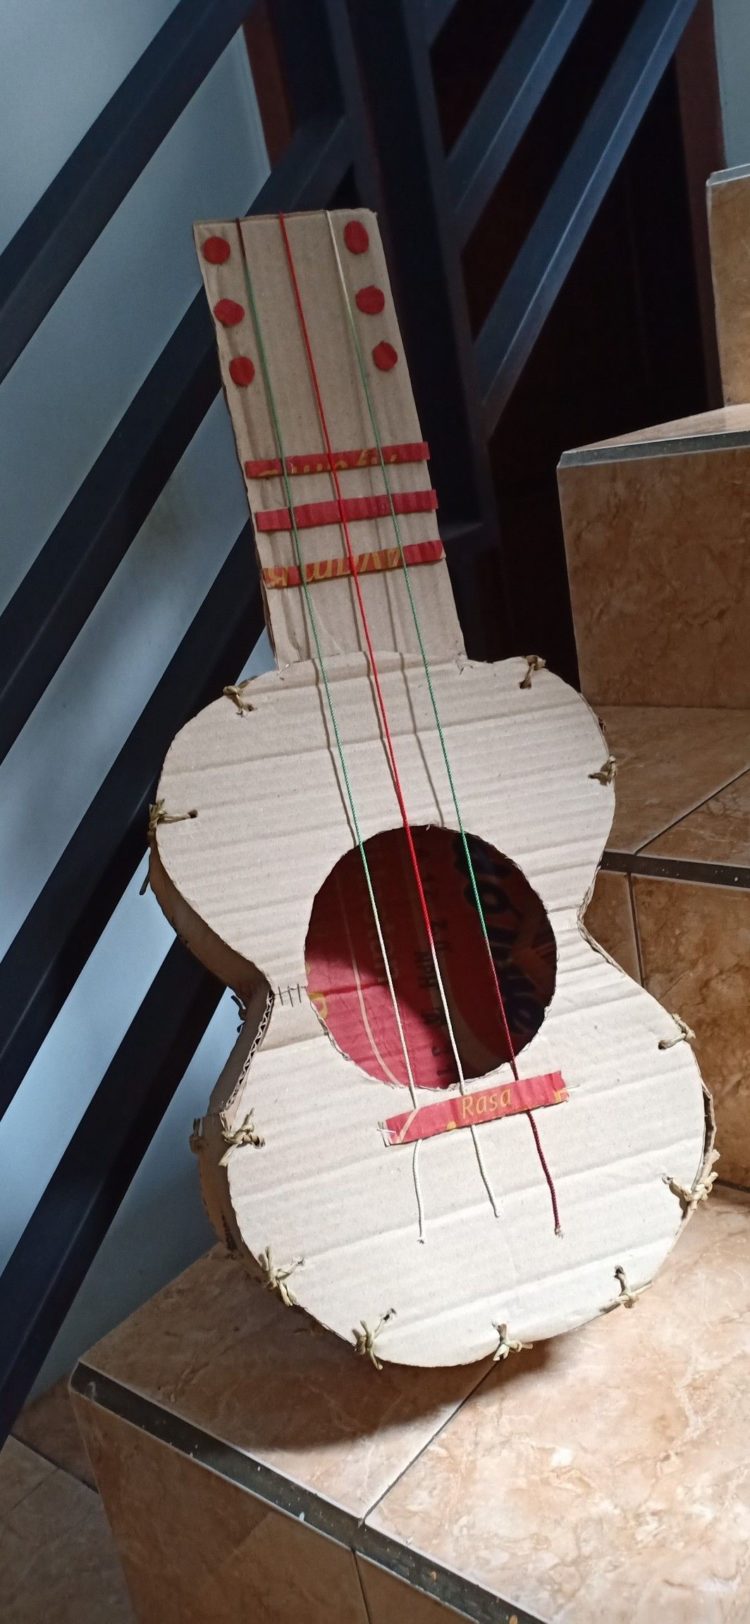 kerajinan dari kardus gitar mini